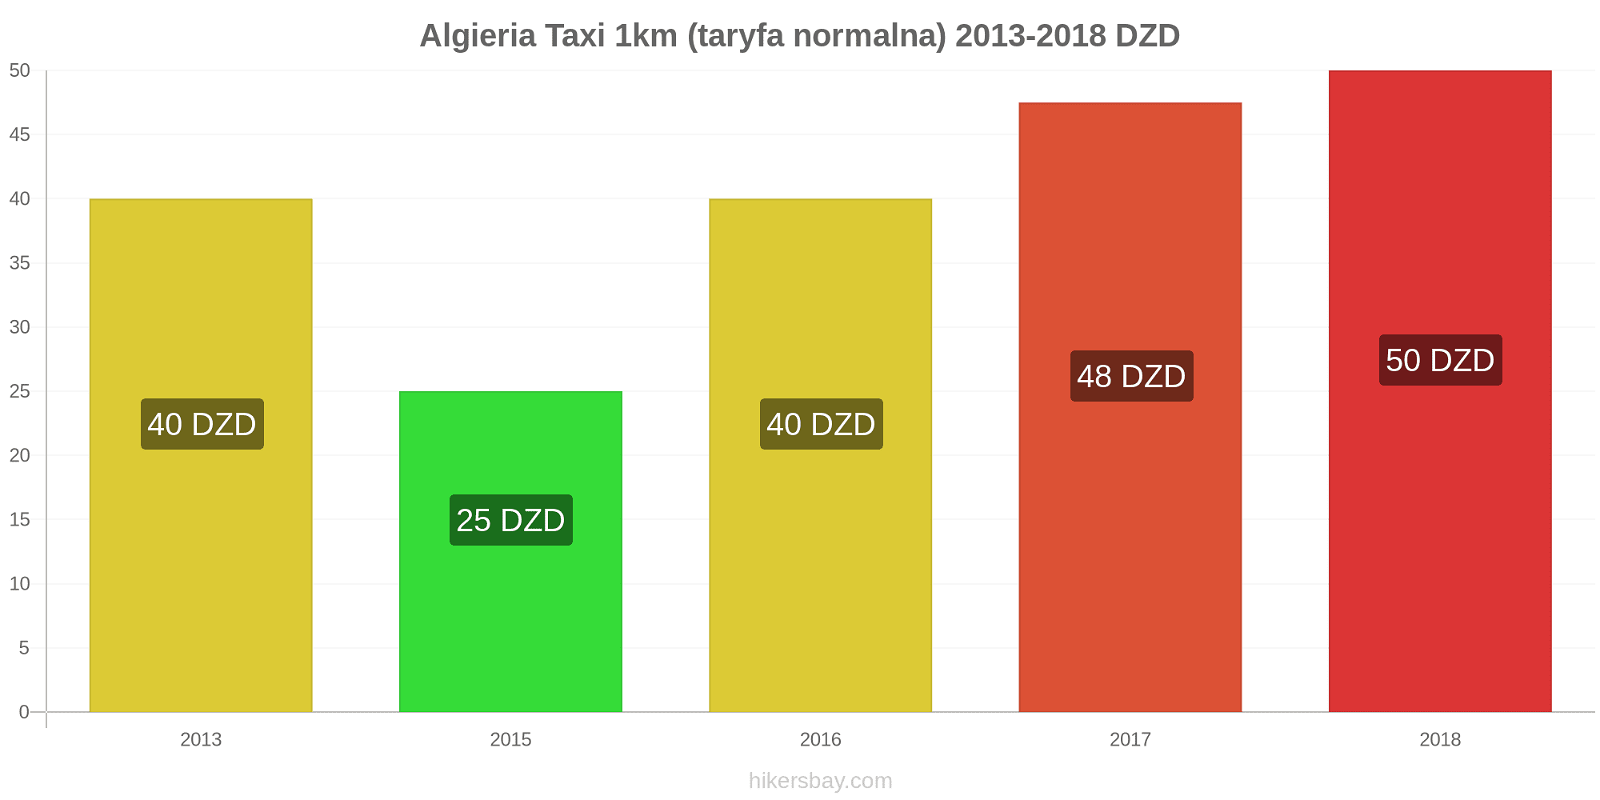 Algieria zmiany cen Taxi 1km (taryfa normalna) hikersbay.com